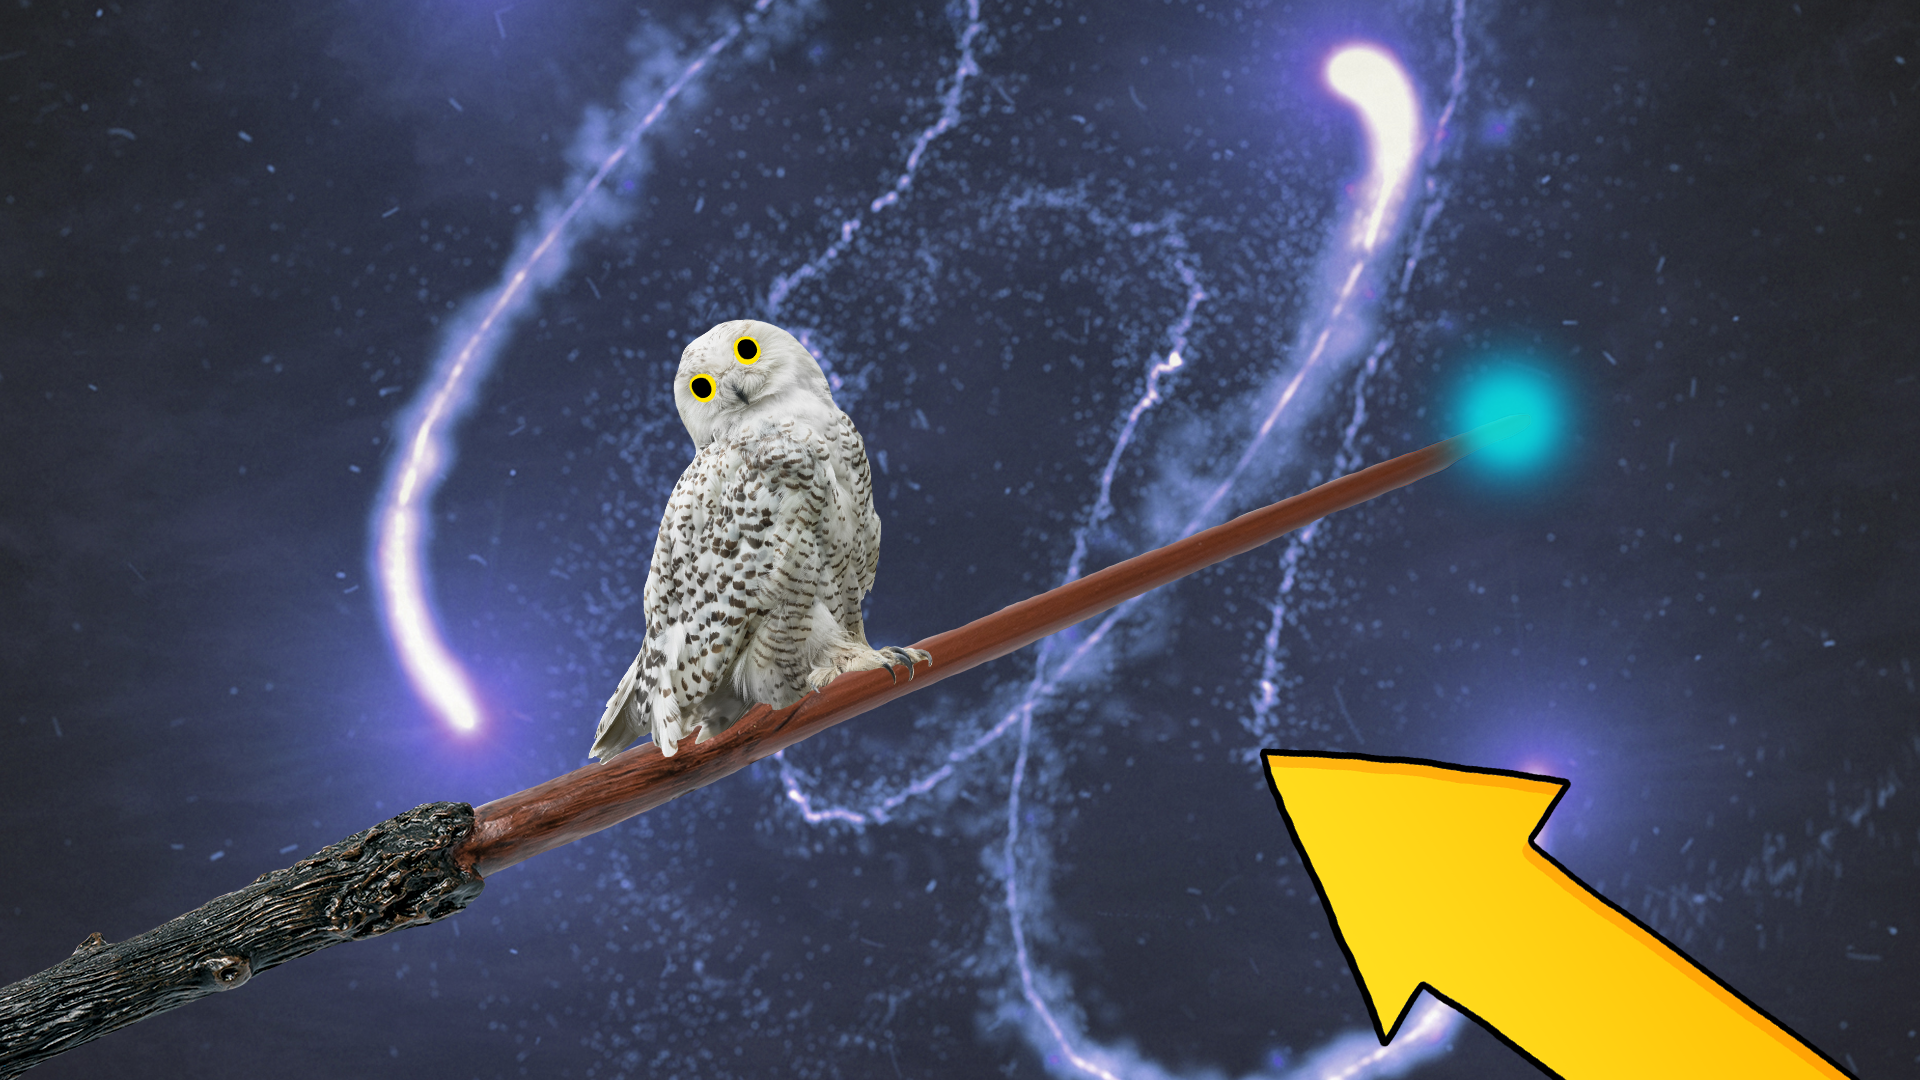 Wand, owl and arrow